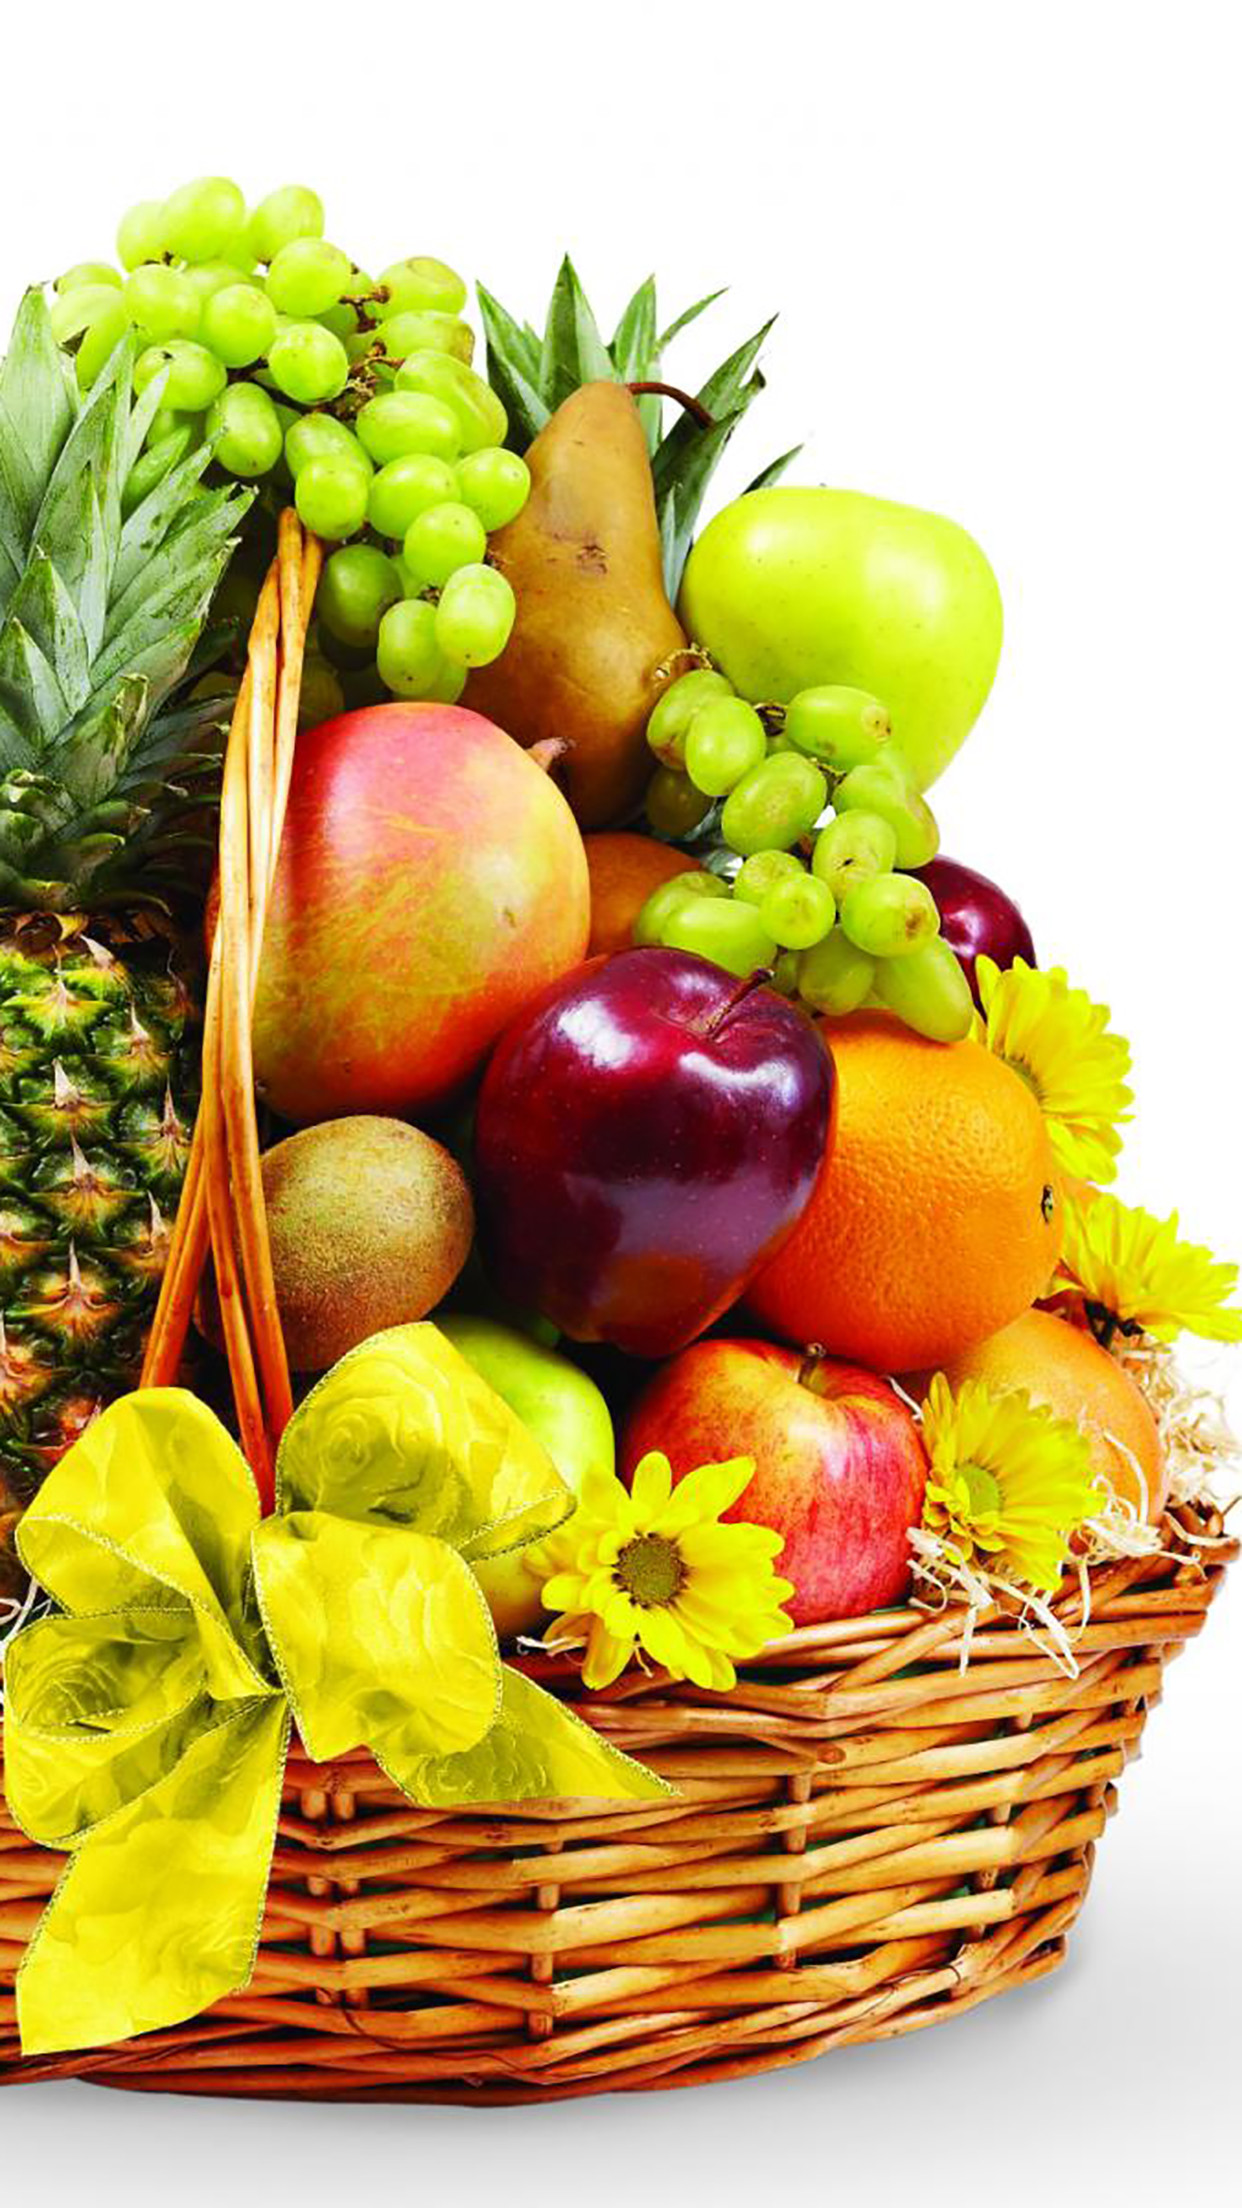 fruit wallpaper hd,natural foods,whole food,basket,local food,food